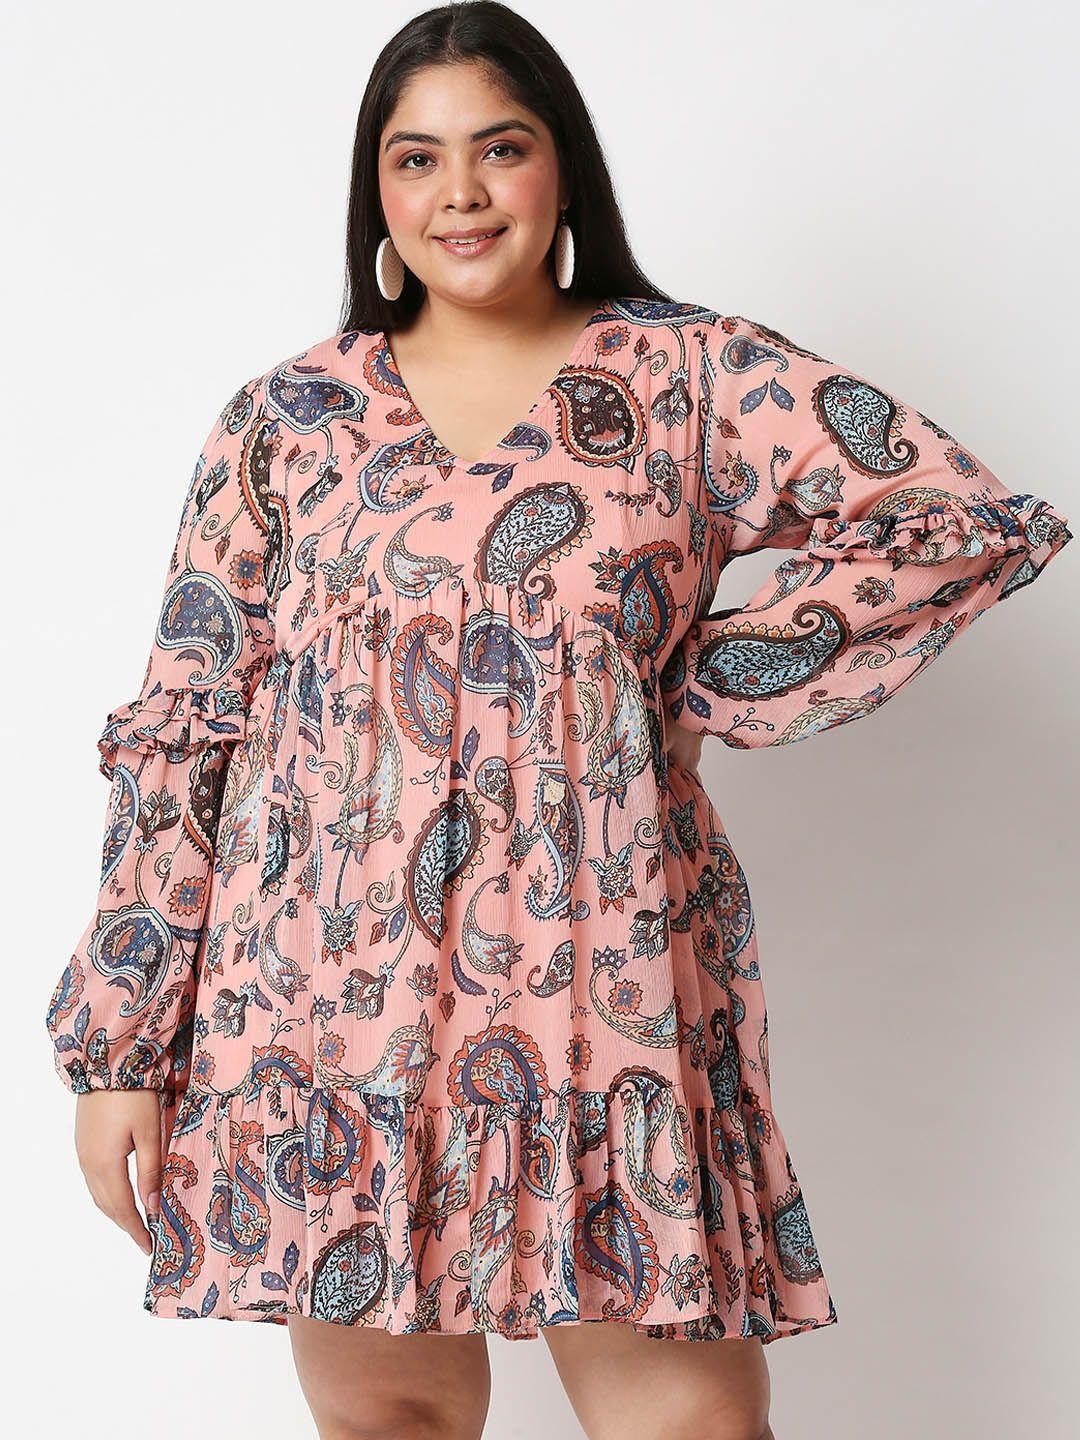 20dresses plus size women pink ethnic motifs chiffon empire dresses